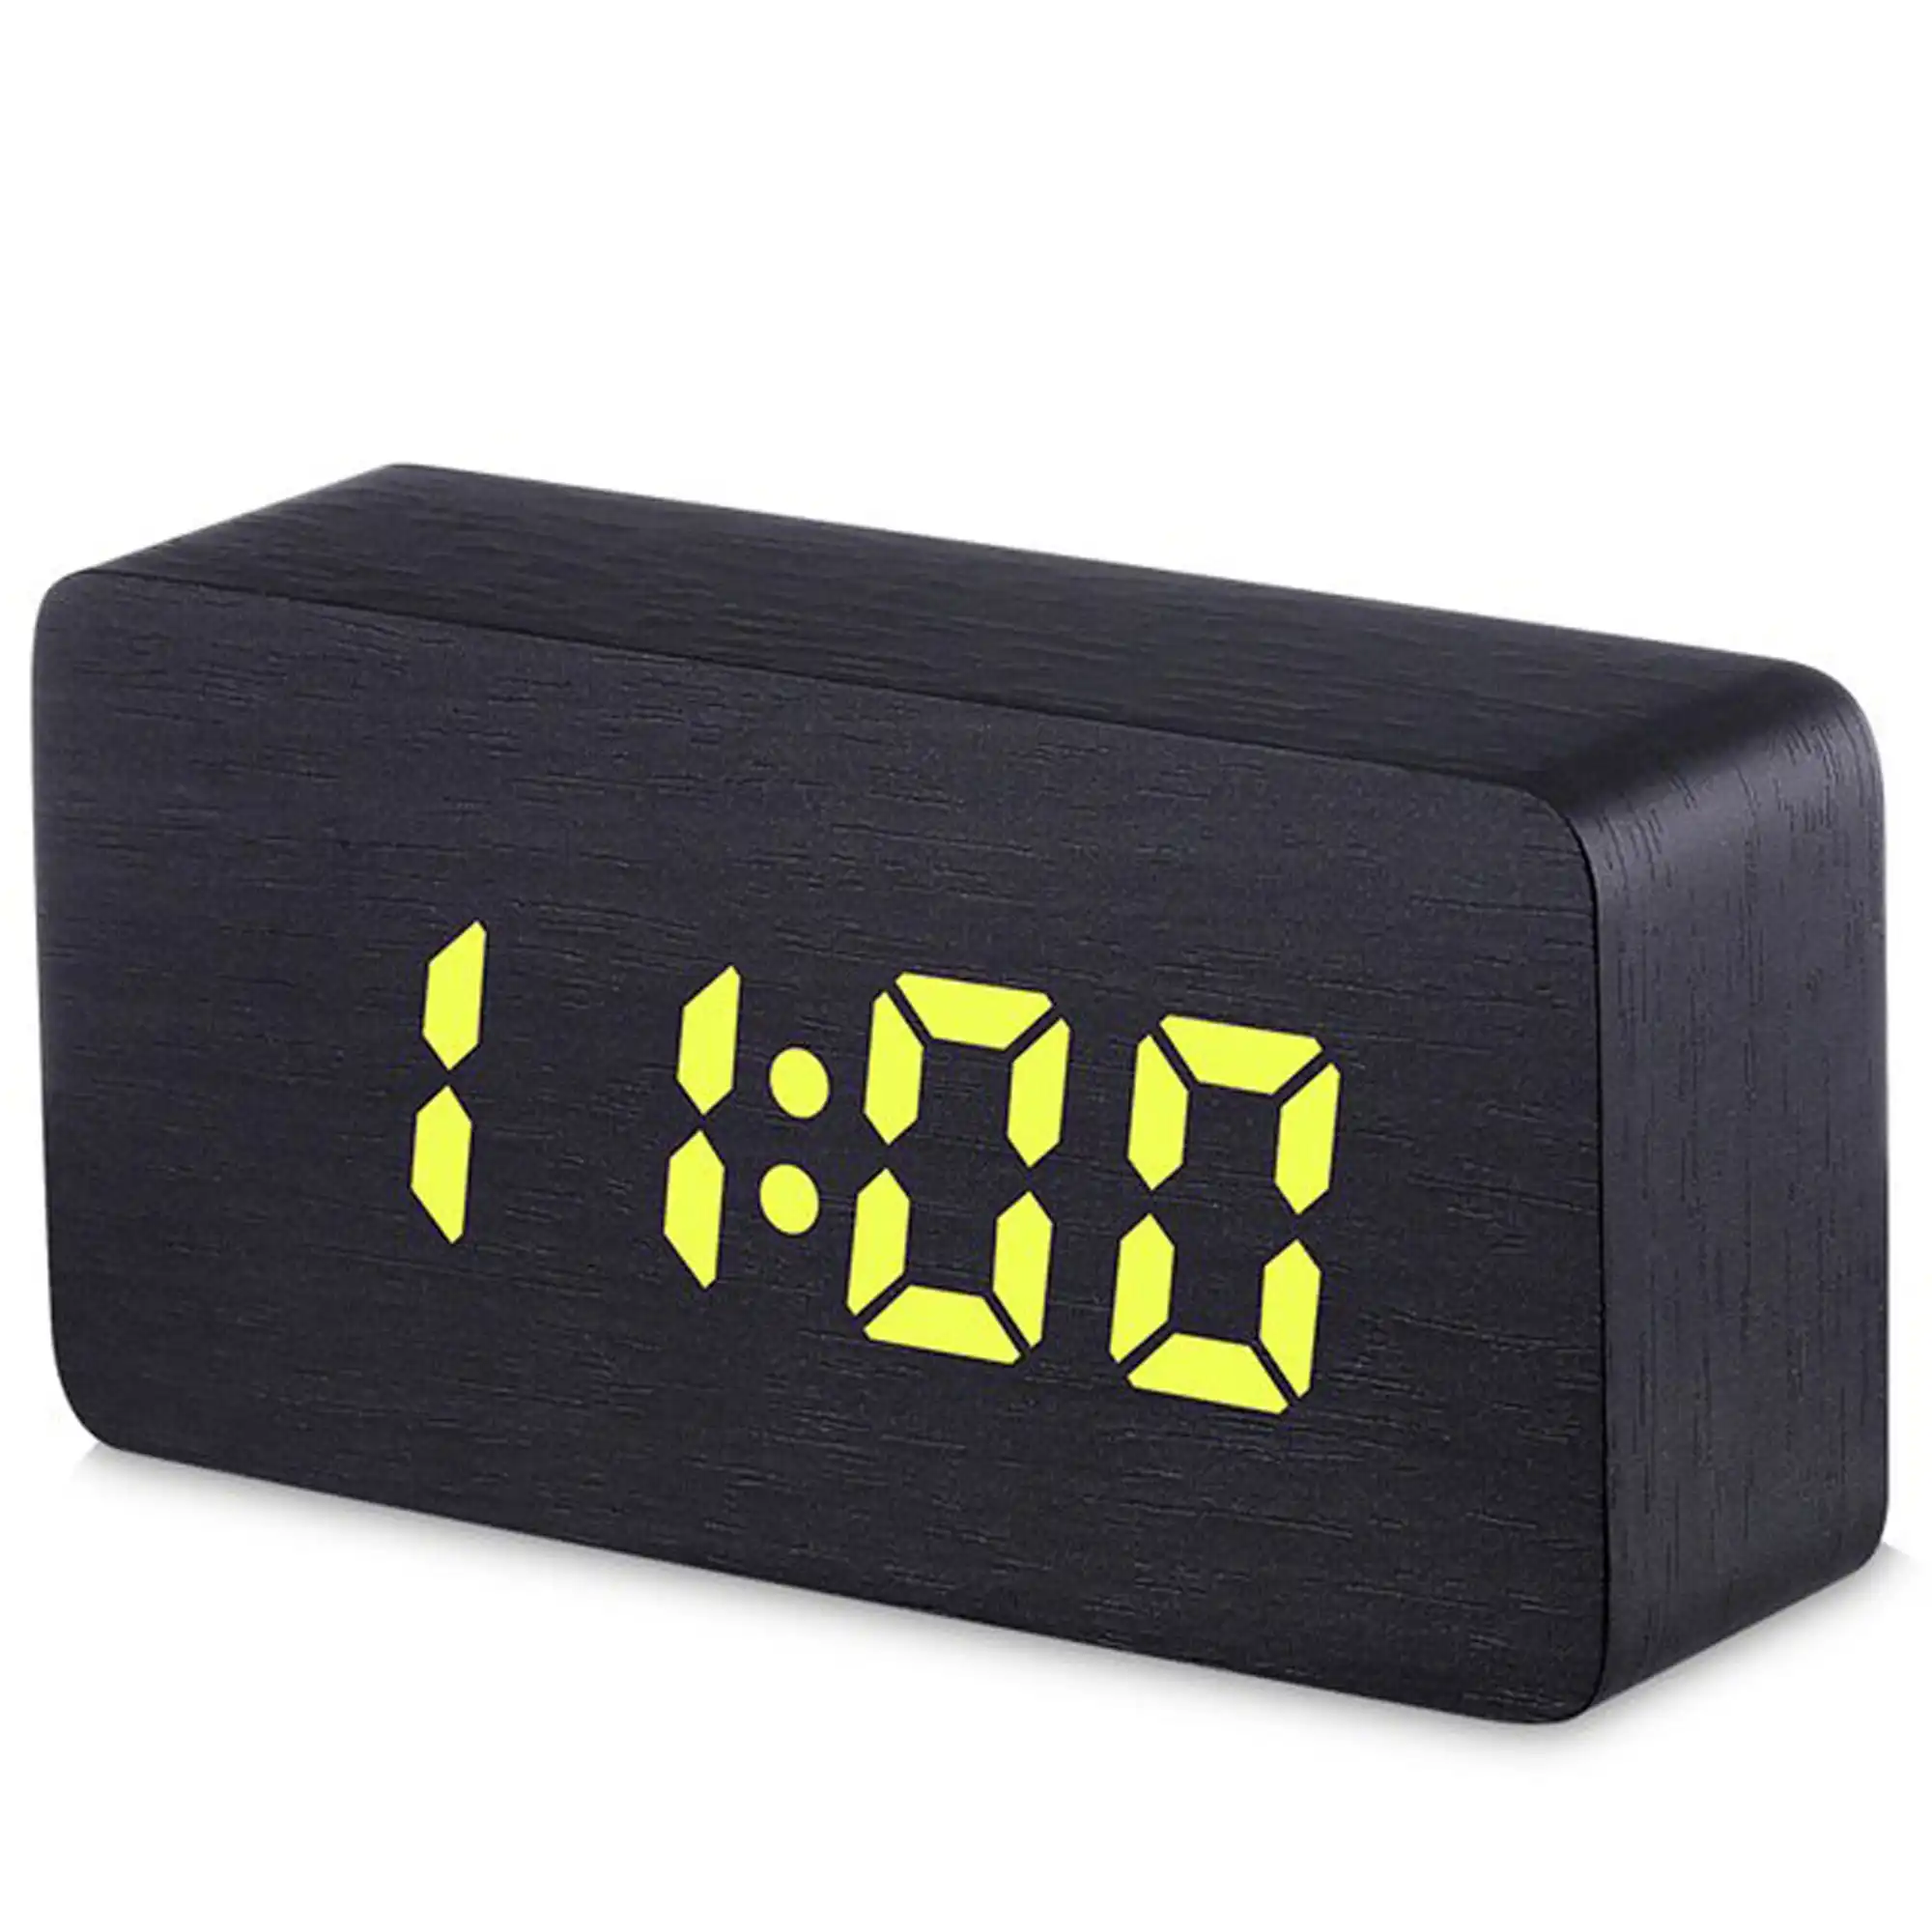 Todo LED Digital Alarm Clock 3 Alarm 115 Colour Display USB Power Woodgrain - Black